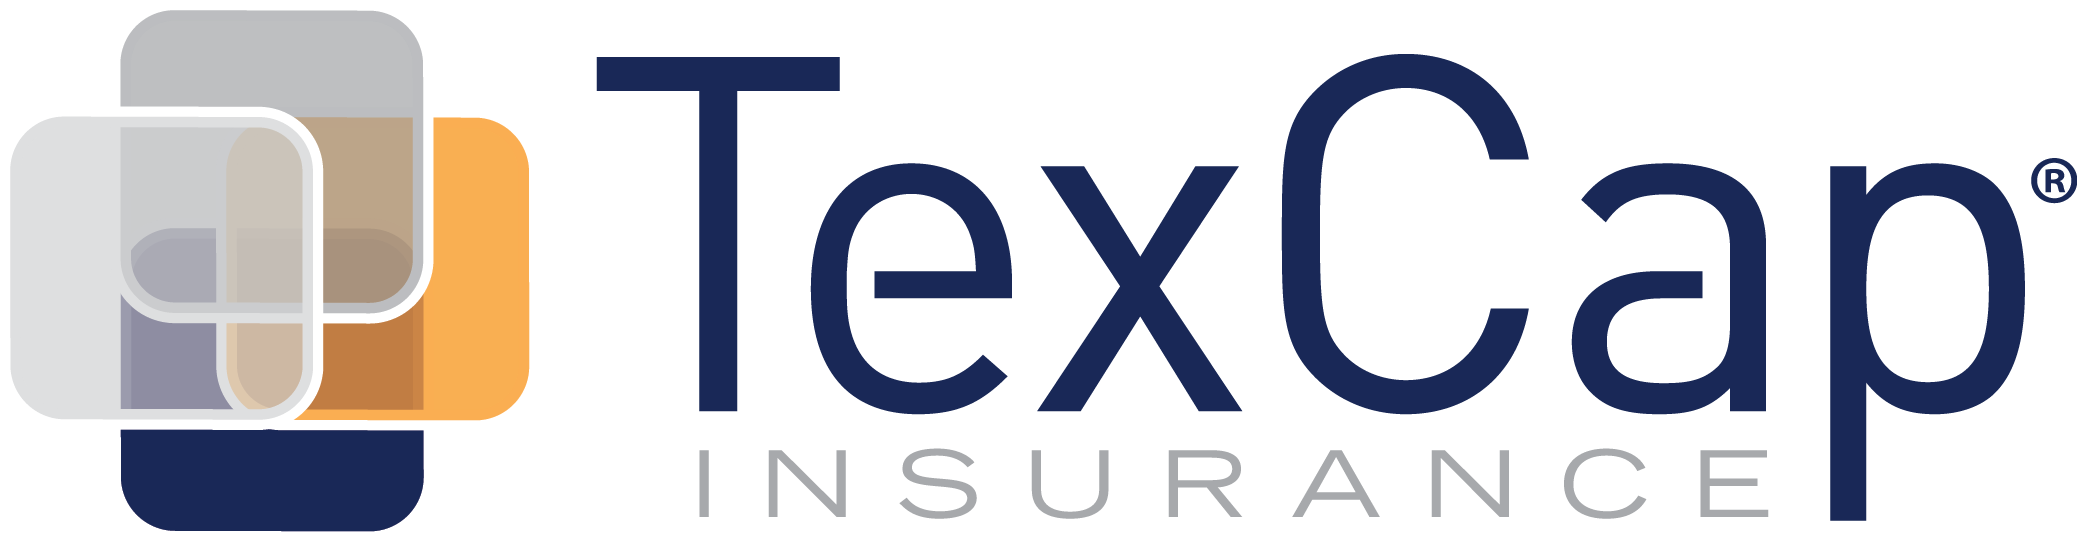 TexCap Insurance